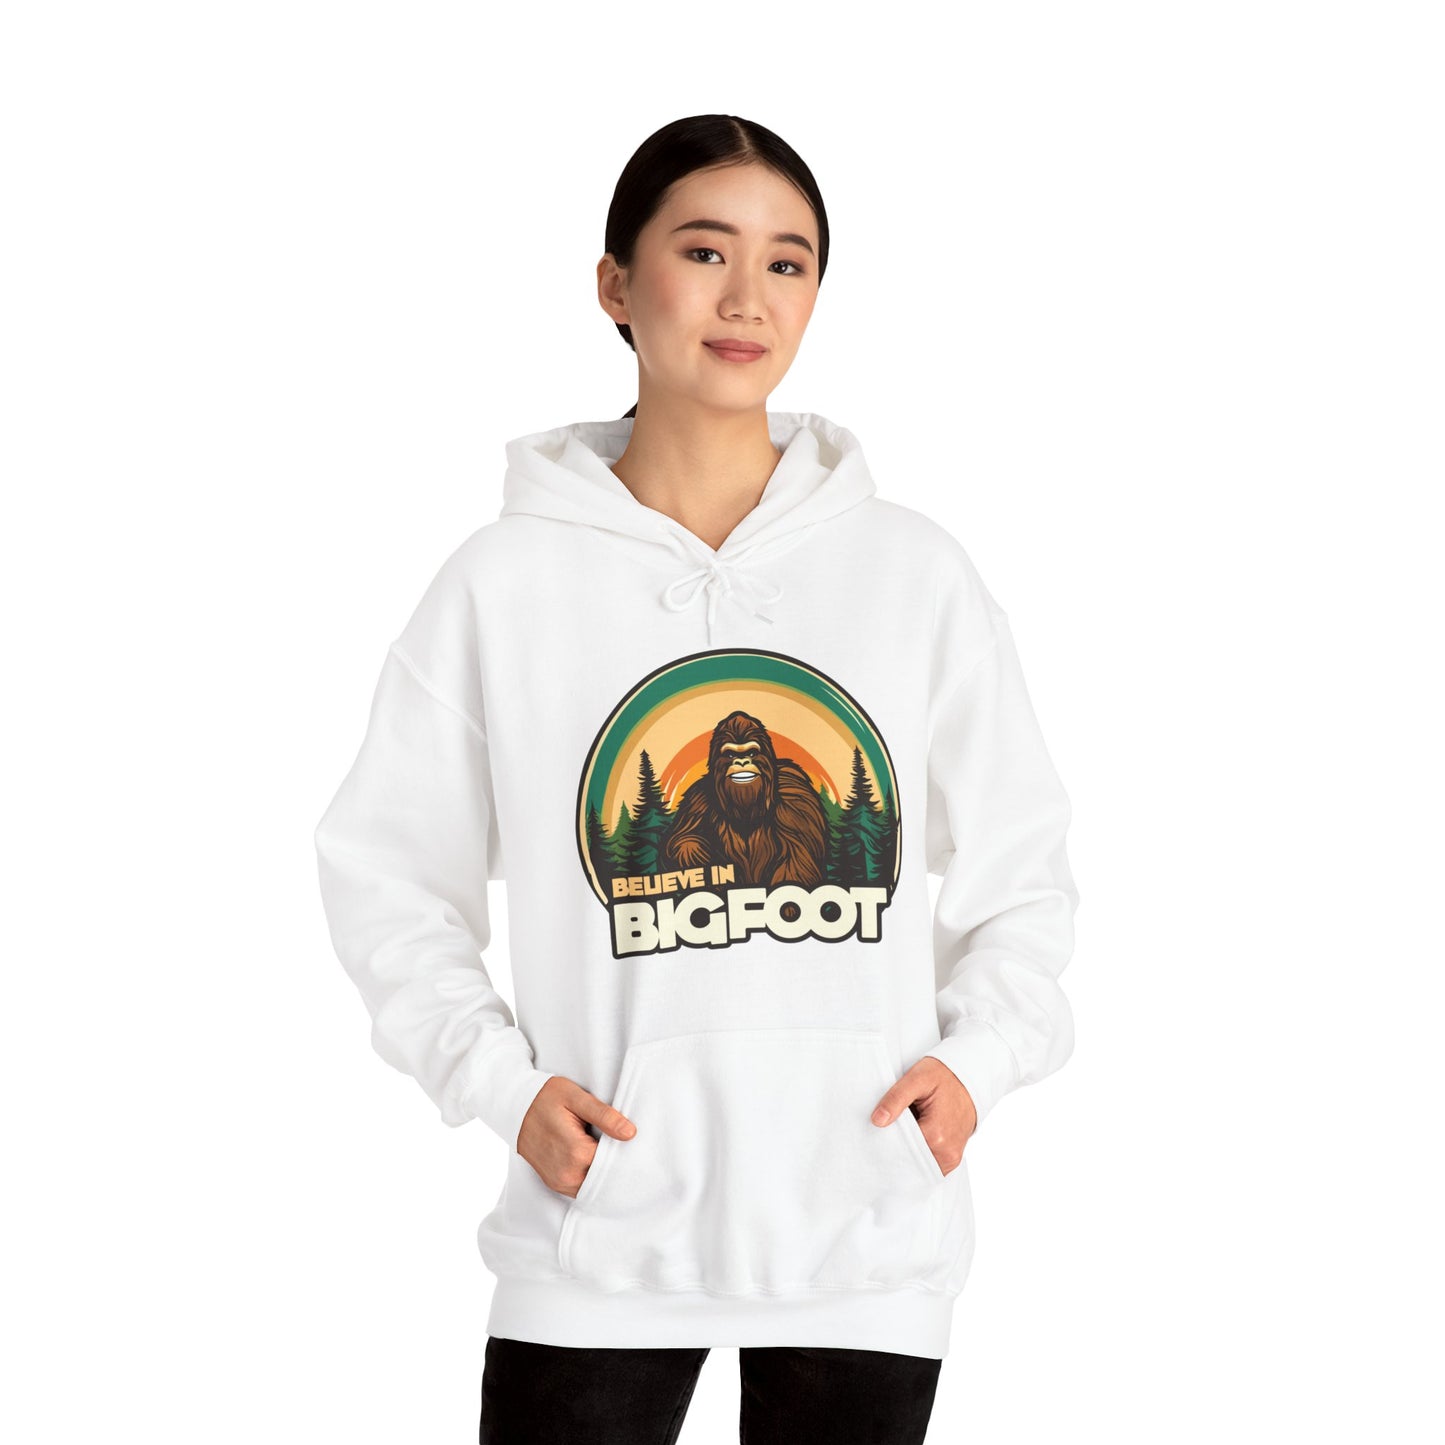 Believe in Bigfoot Unisex Adult Hooded Heavy Blend Sweatshirt